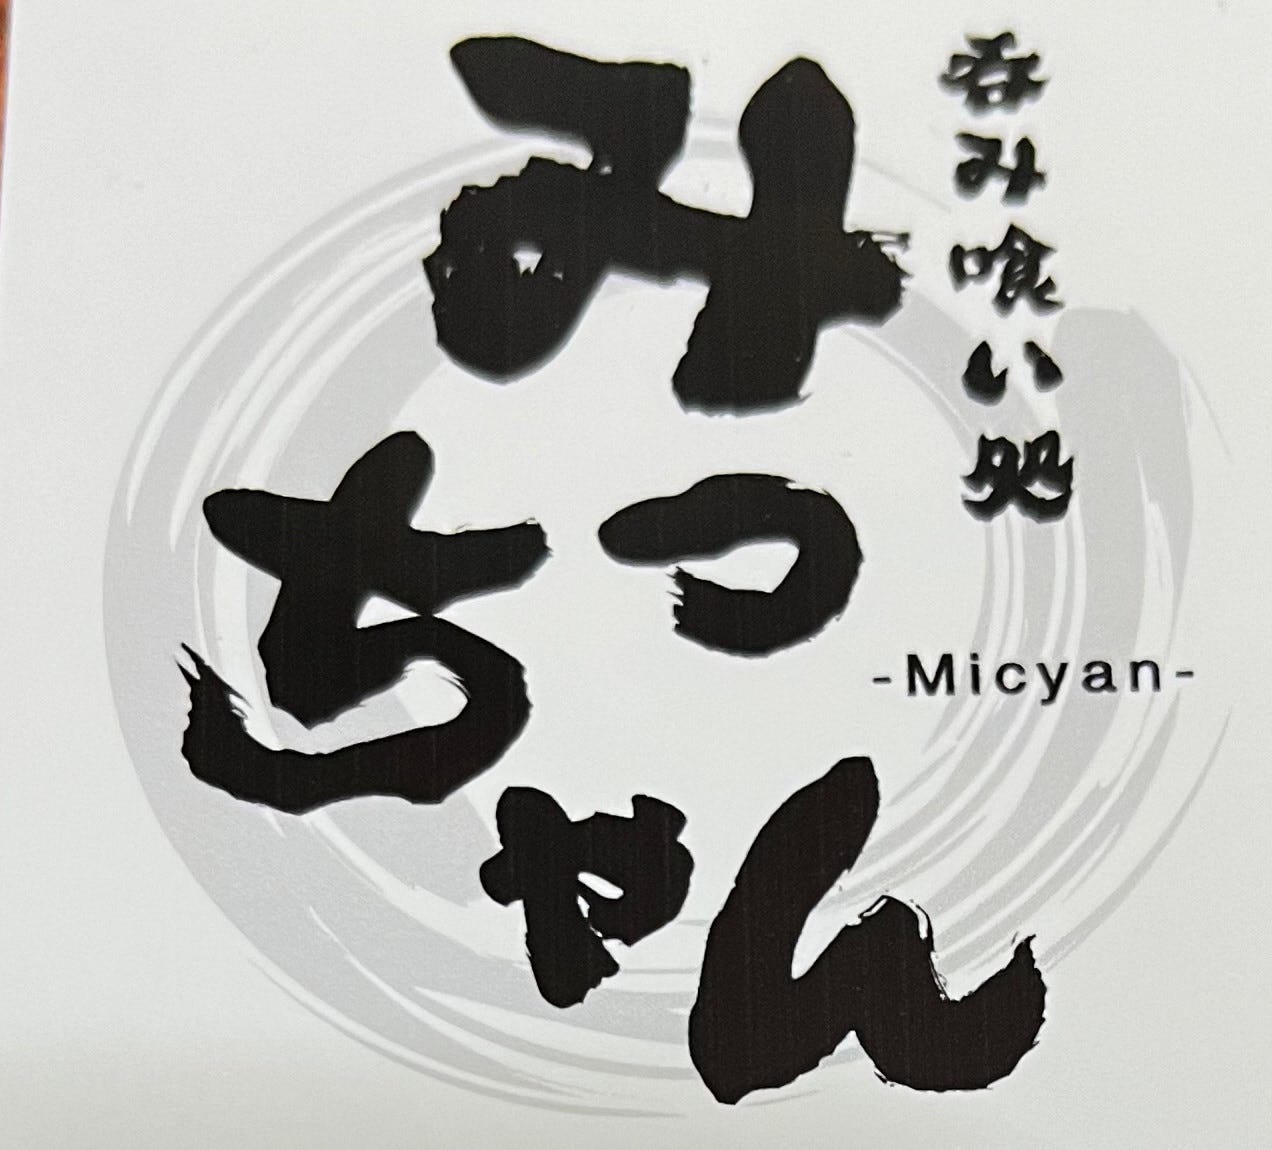 MICCYAN image